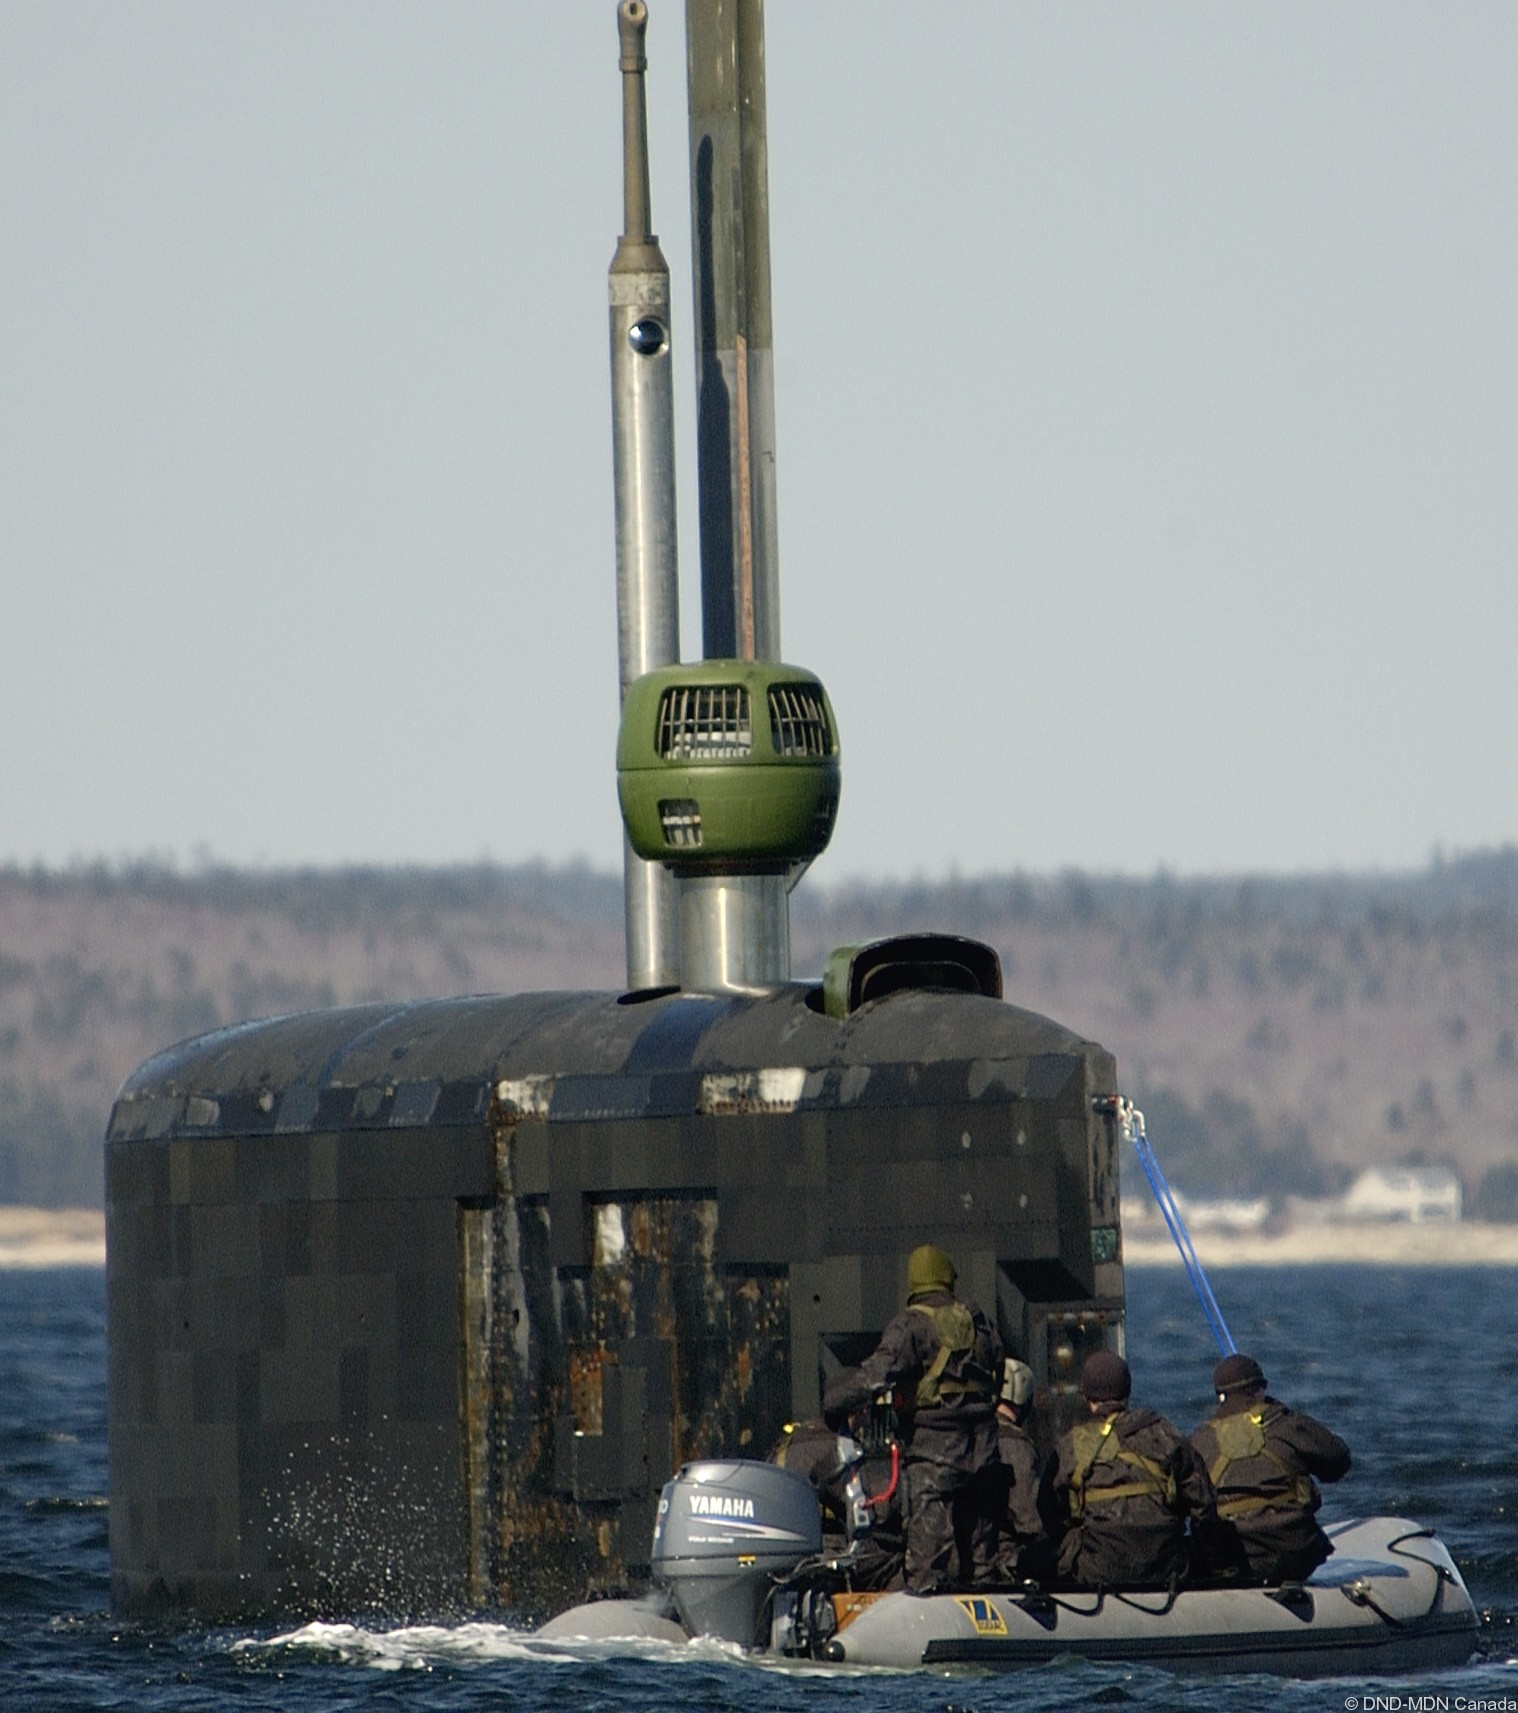 ssk-877 hmcs windsor victoria upholder class attack submarine hunter killer ncsm royal canadian navy 10